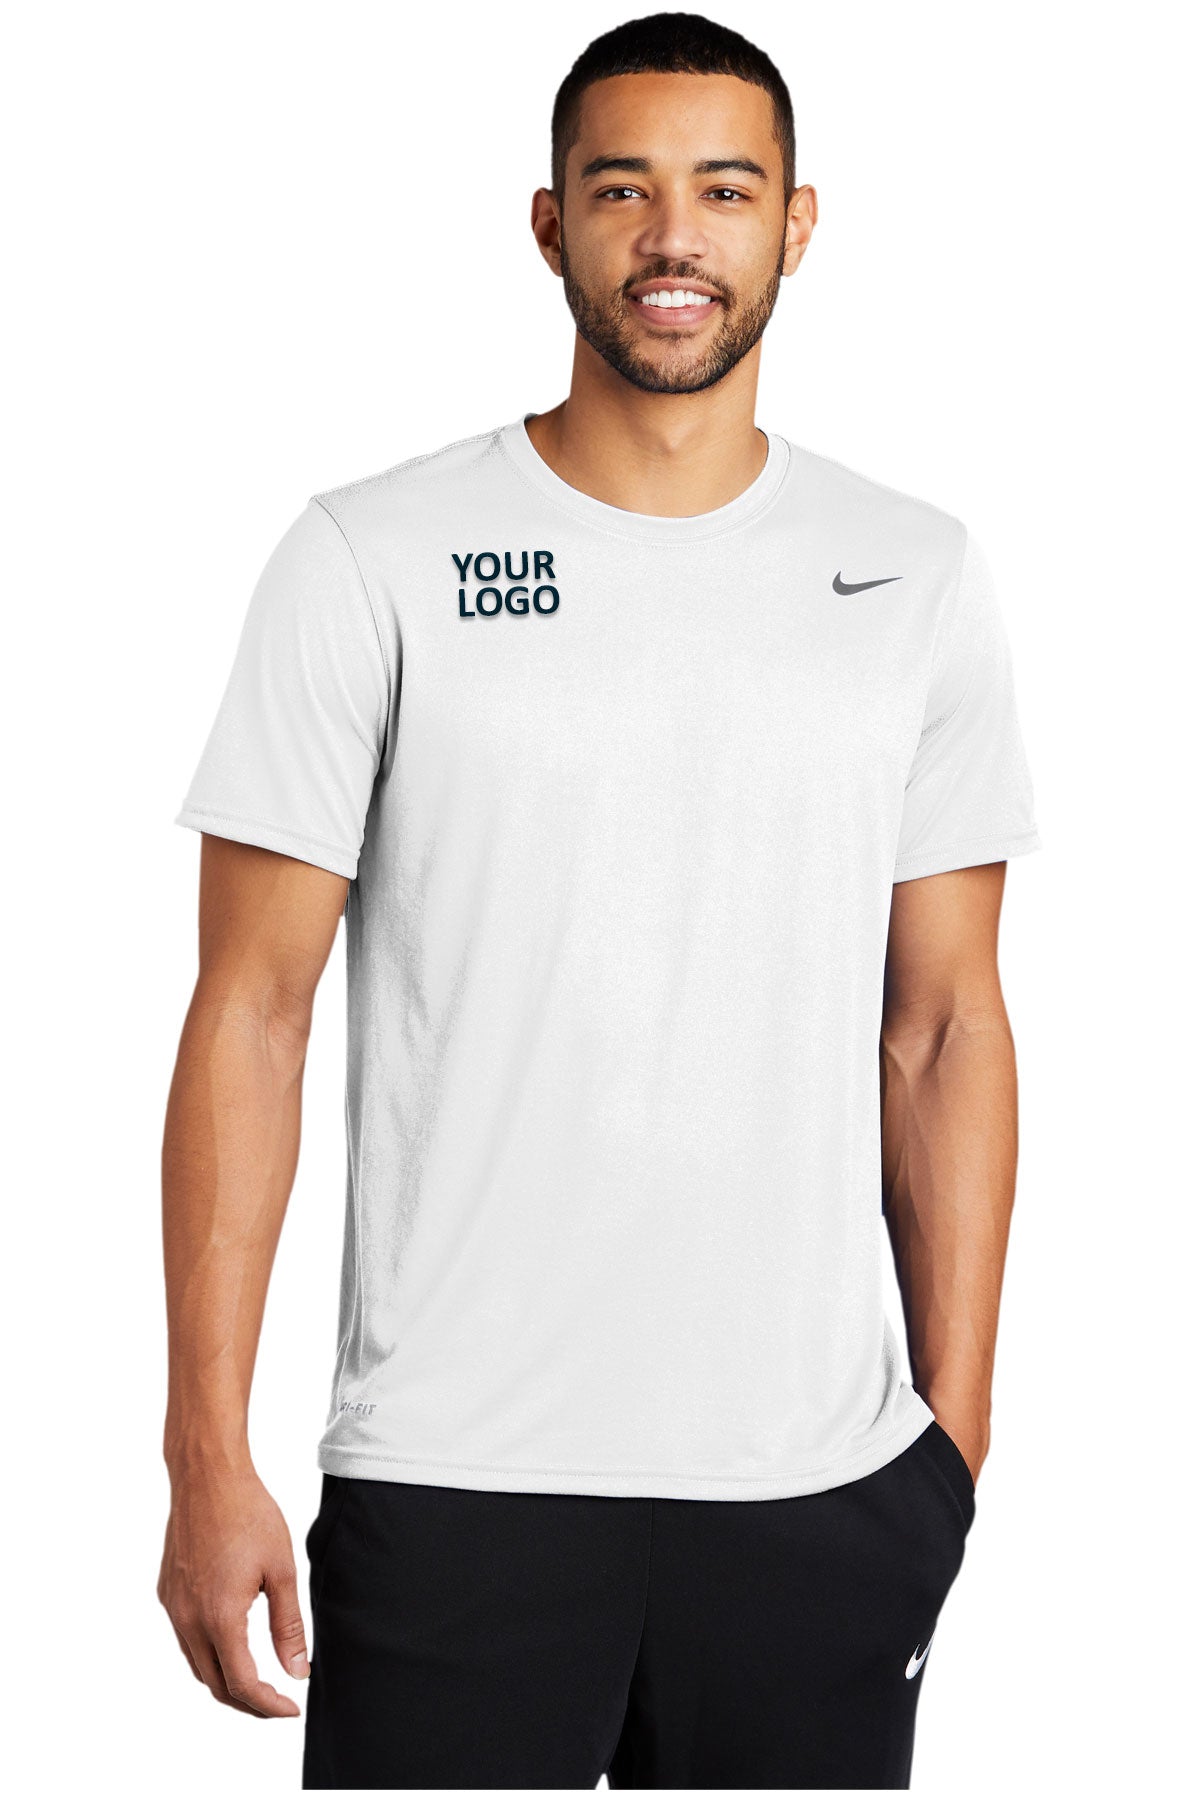 Nike Team rLegend Customized Tee's, White